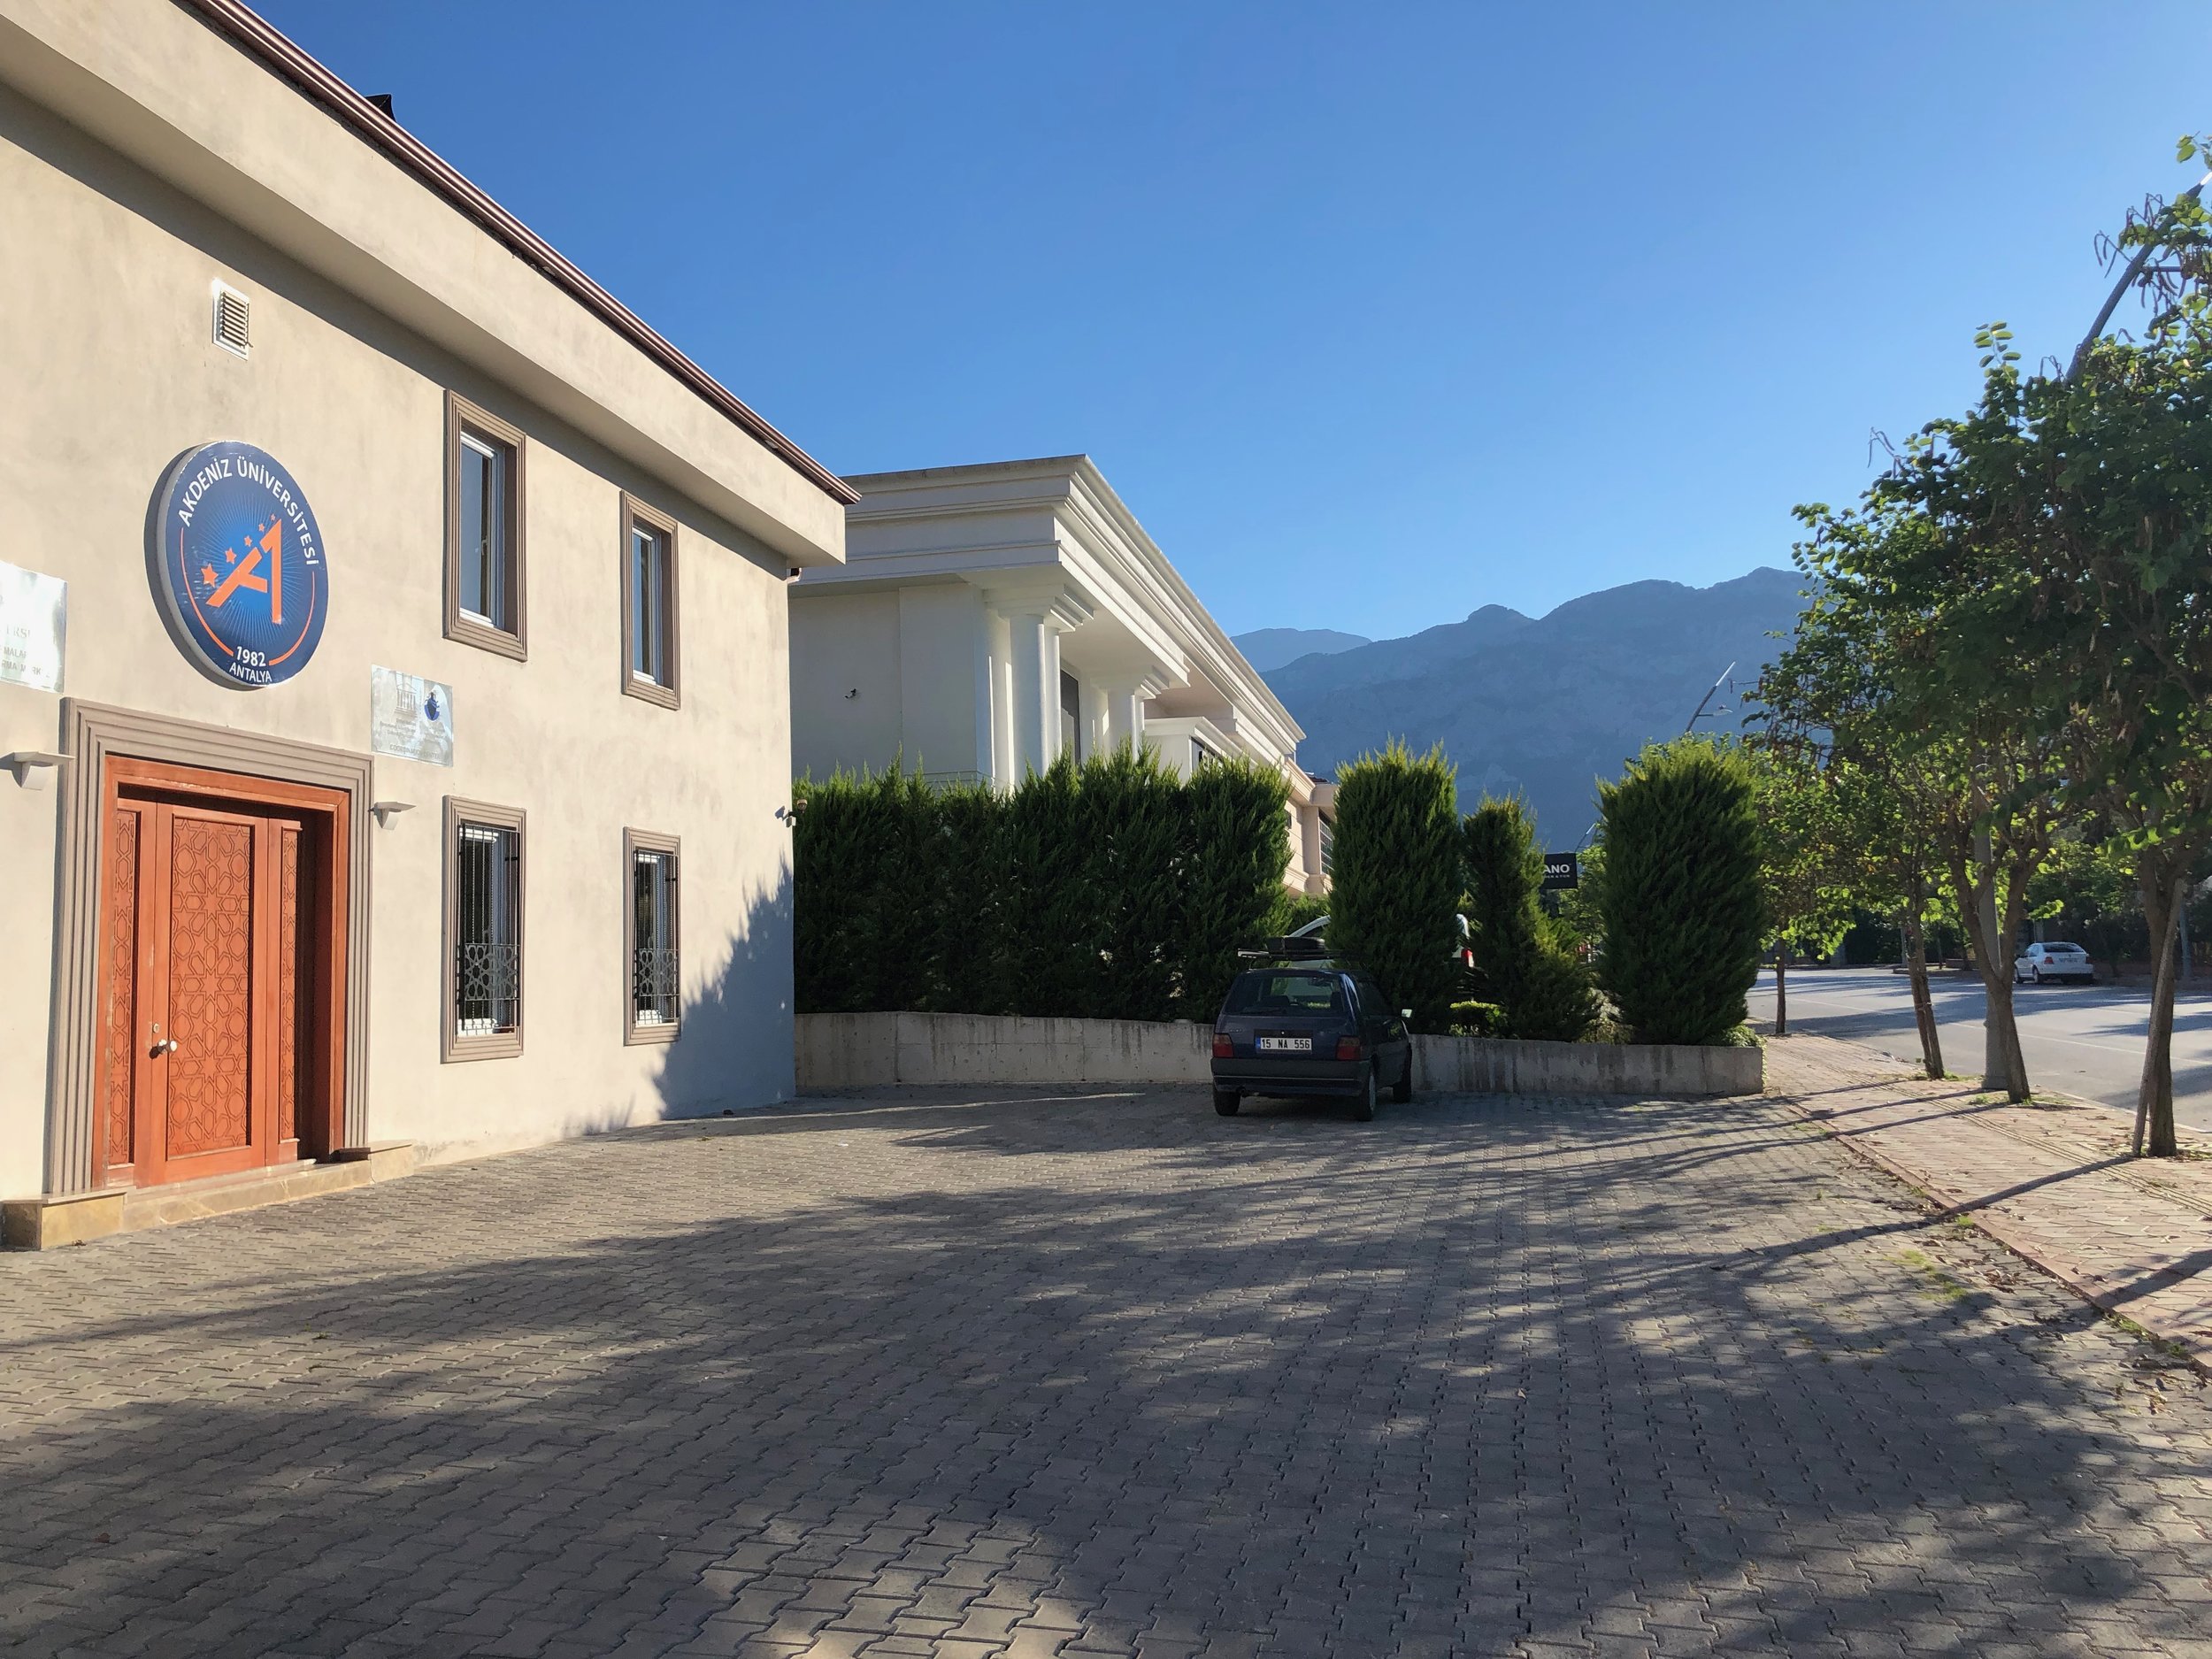  Akdeniz University Facilities in Kemer 